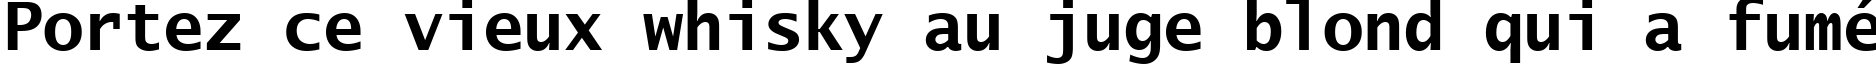 Пример написания шрифтом Lucida Sans Typewriter Bold текста на французском